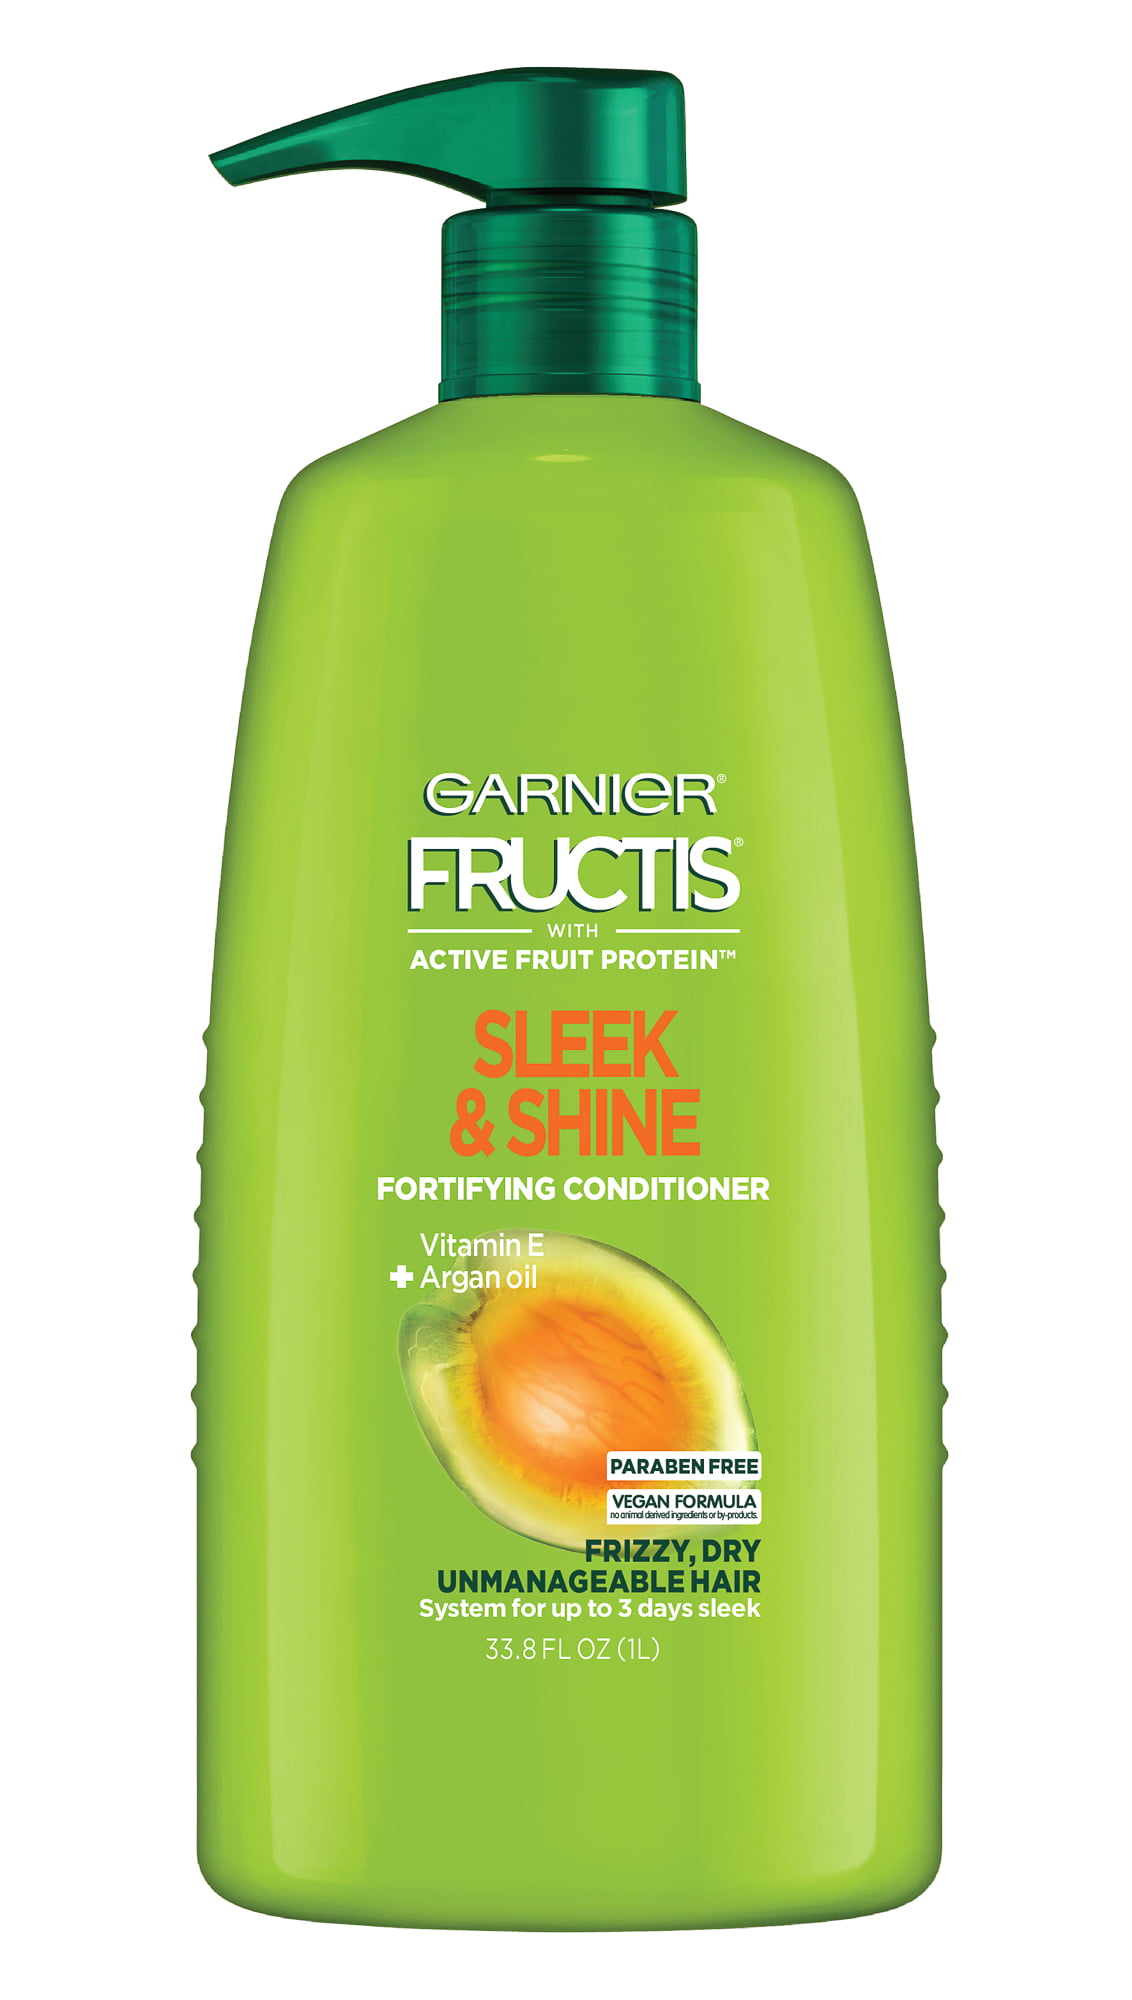 Garnier Fructis Sleek & Shine Fortifying Conditioner for Frizzy, Dry Hair, 33.8 fl oz